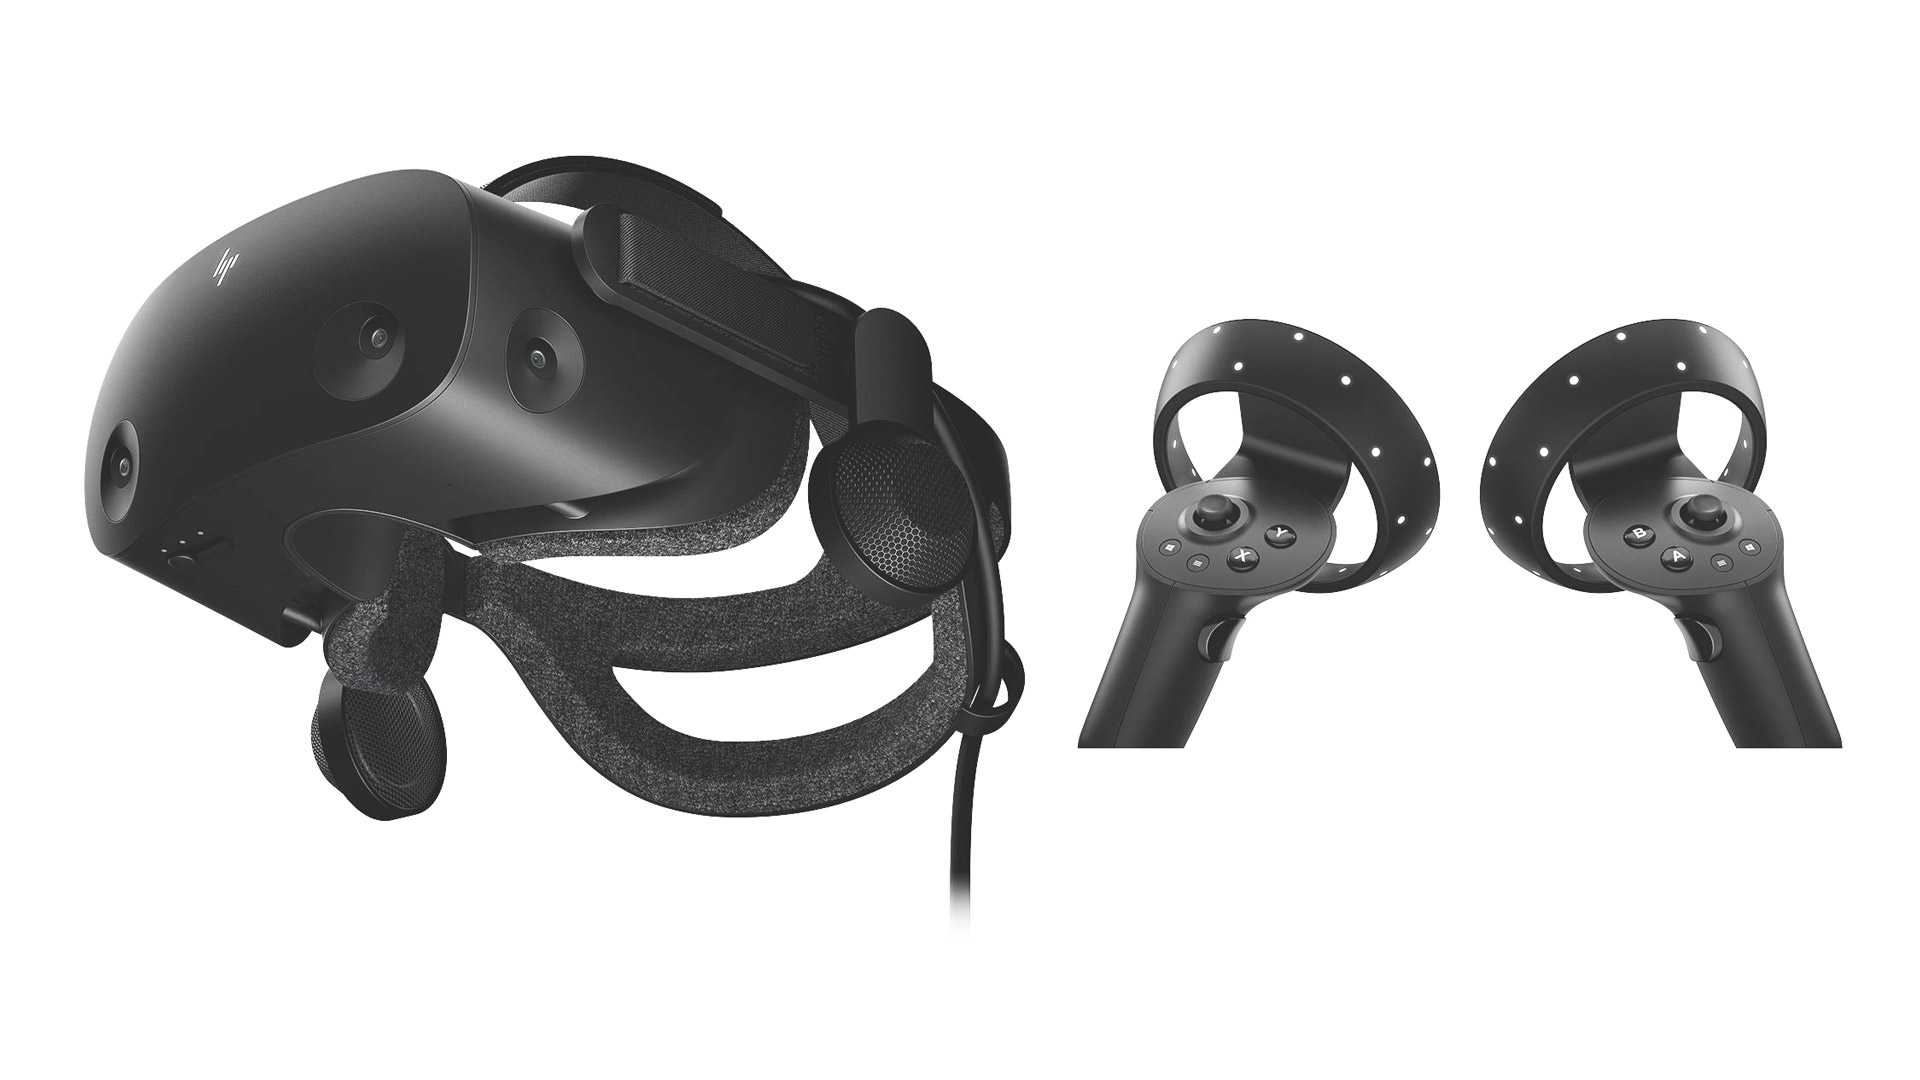 Amazon.com: hp reverb virtual reality headset - professional edition: video games